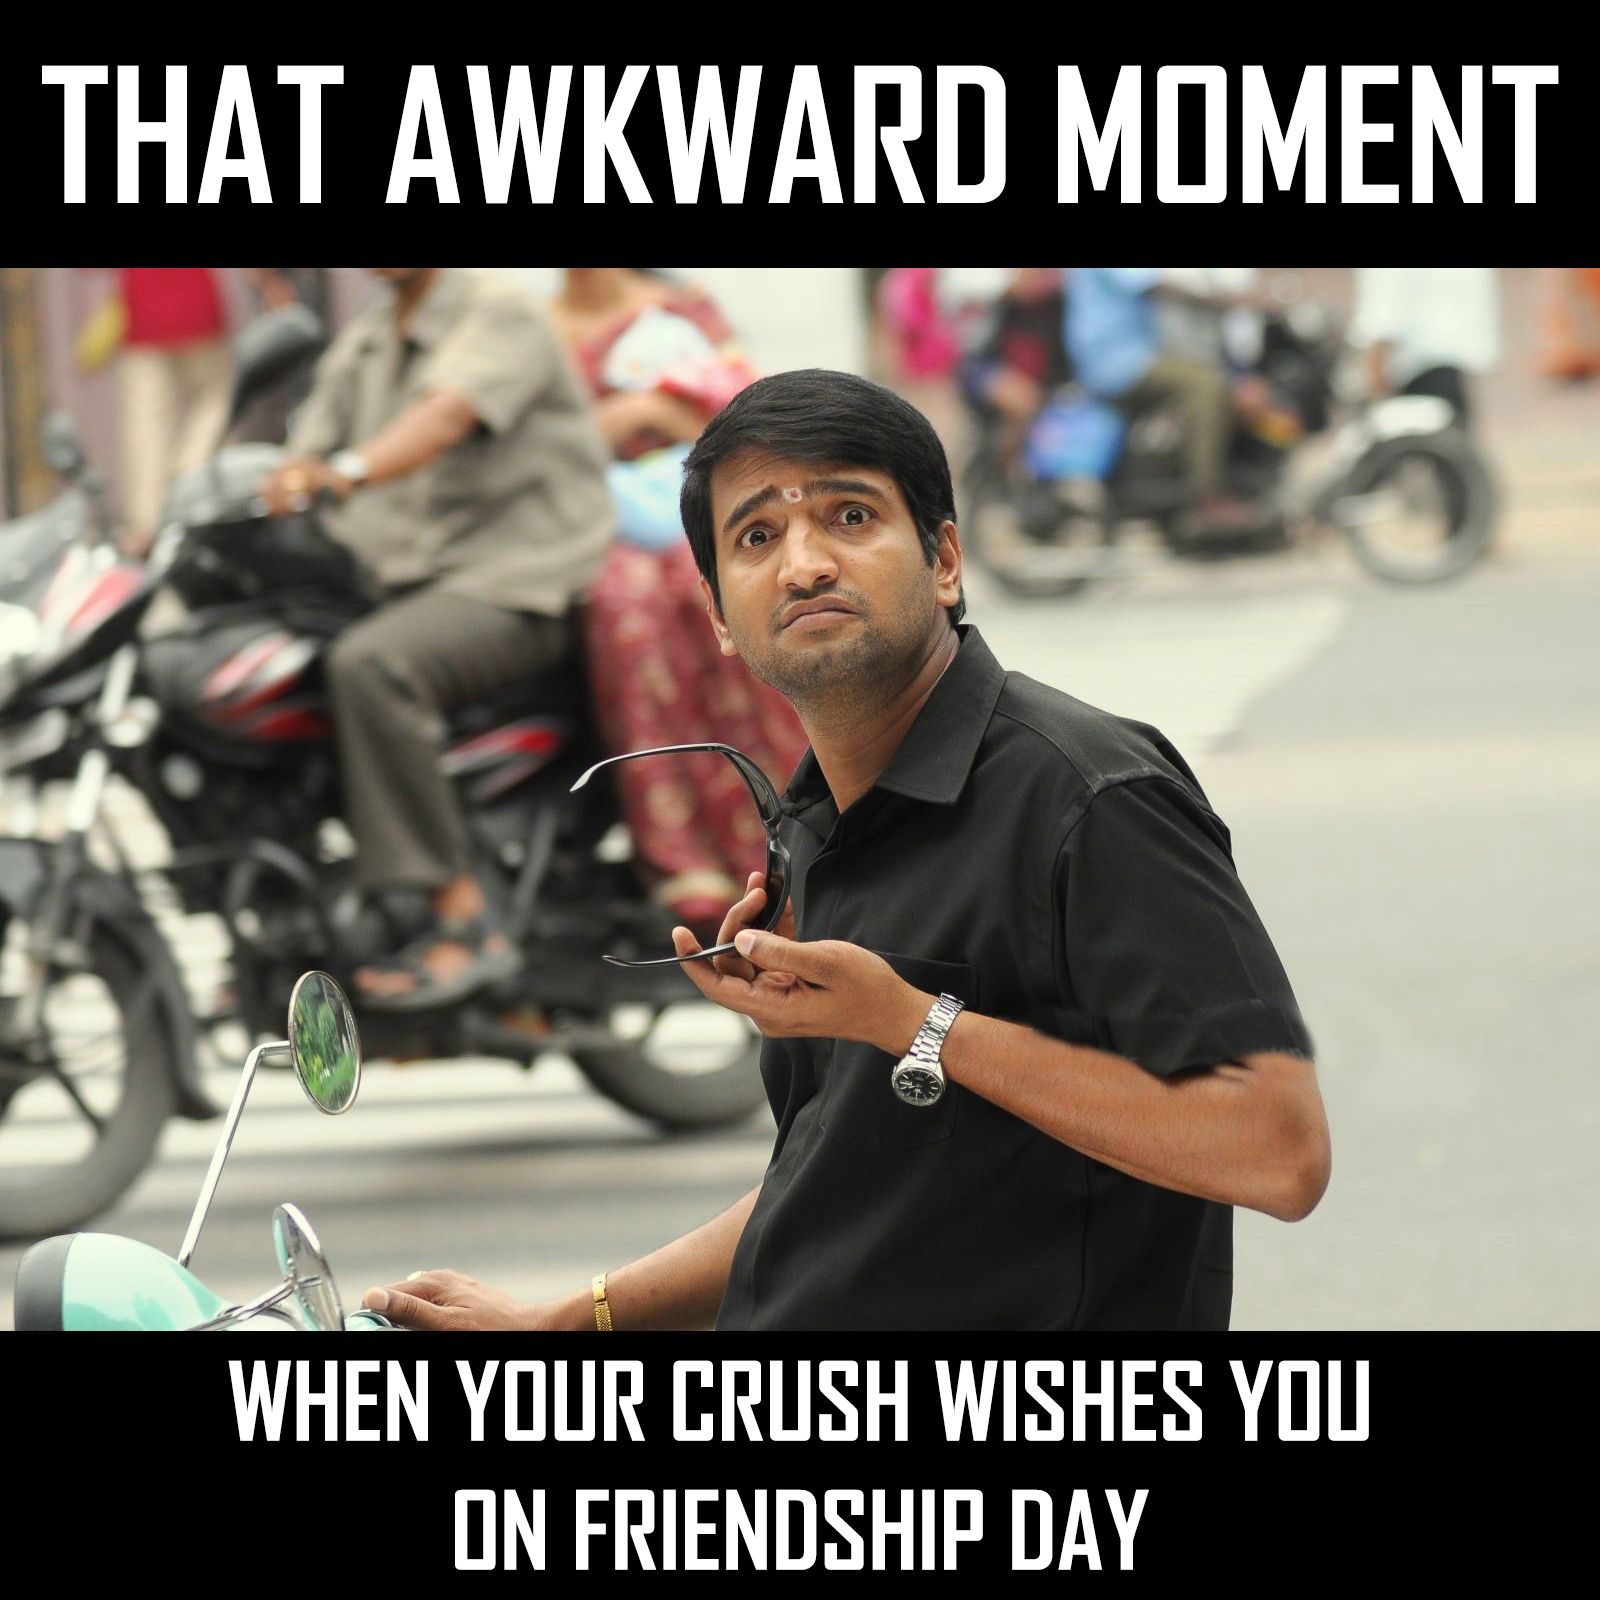 Happy Friendship Day Memes